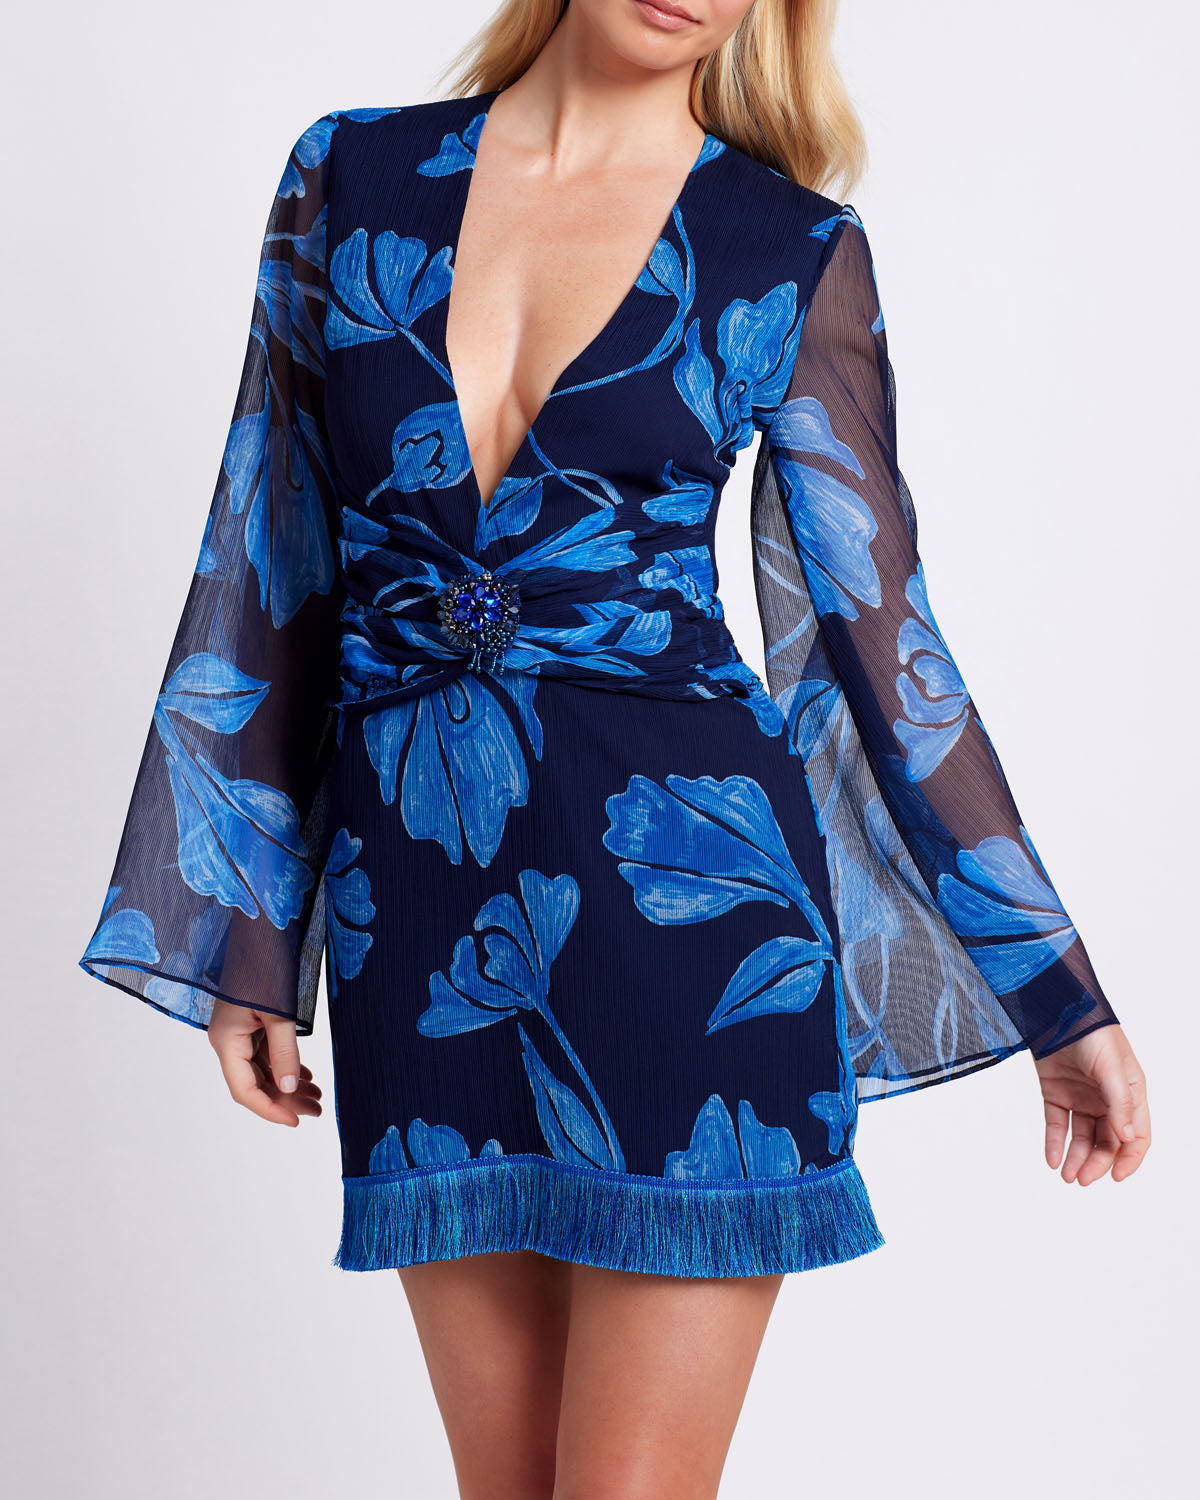 PatBo Nightflower Fringe Trim Mini Dress - Premium Short dress from Marina St Barth - Just $495! Shop now at Marina St Barth